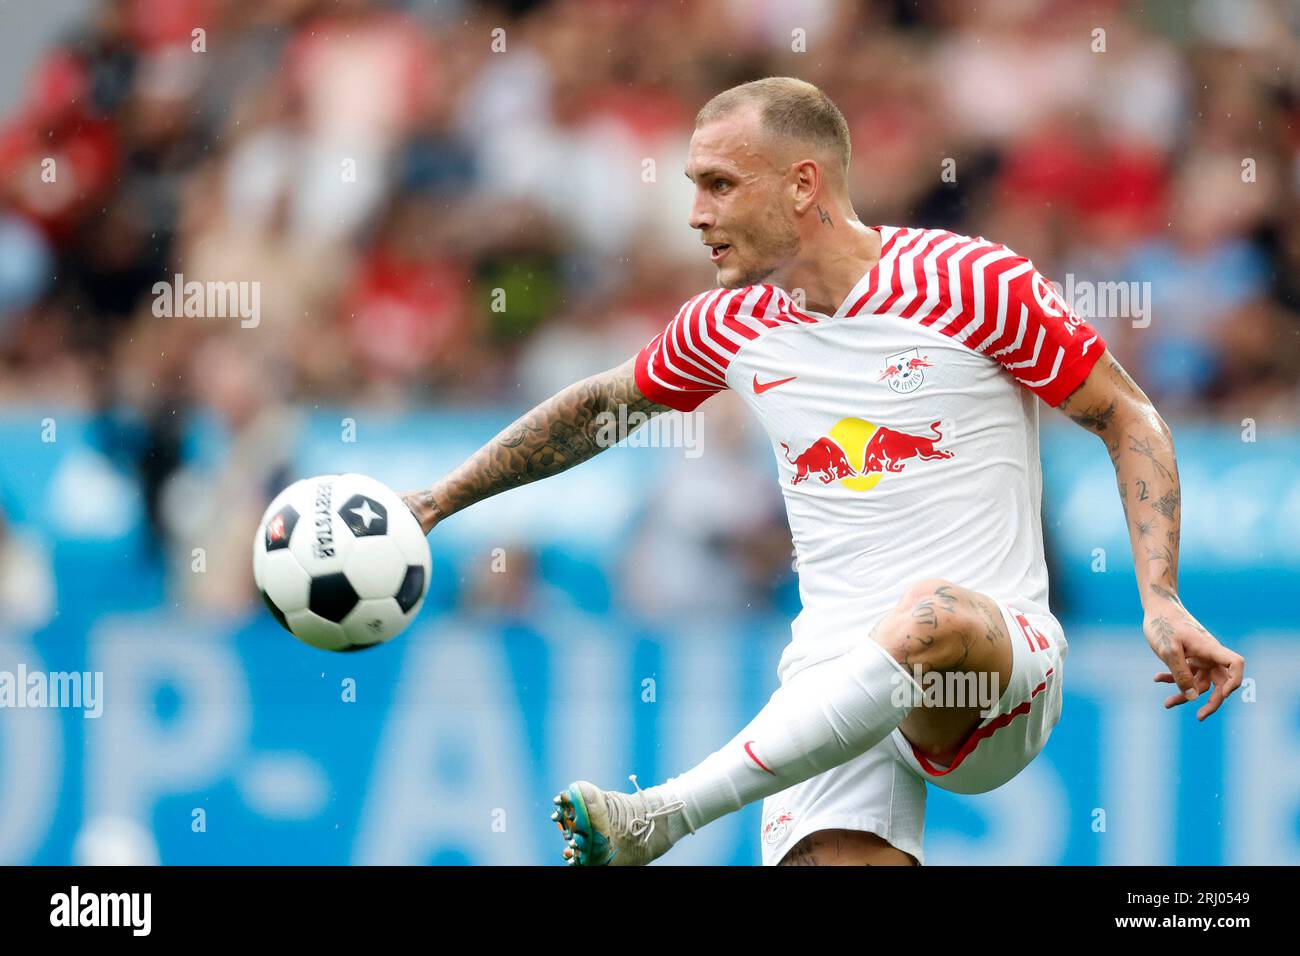 RB Leipzig English on X: ⚽ Goal vs. Crvena zvezda ⚽ Goal vs. 1. FC Köln  David Raum is starting to get into the swing of things 🏌️‍♂️   / X